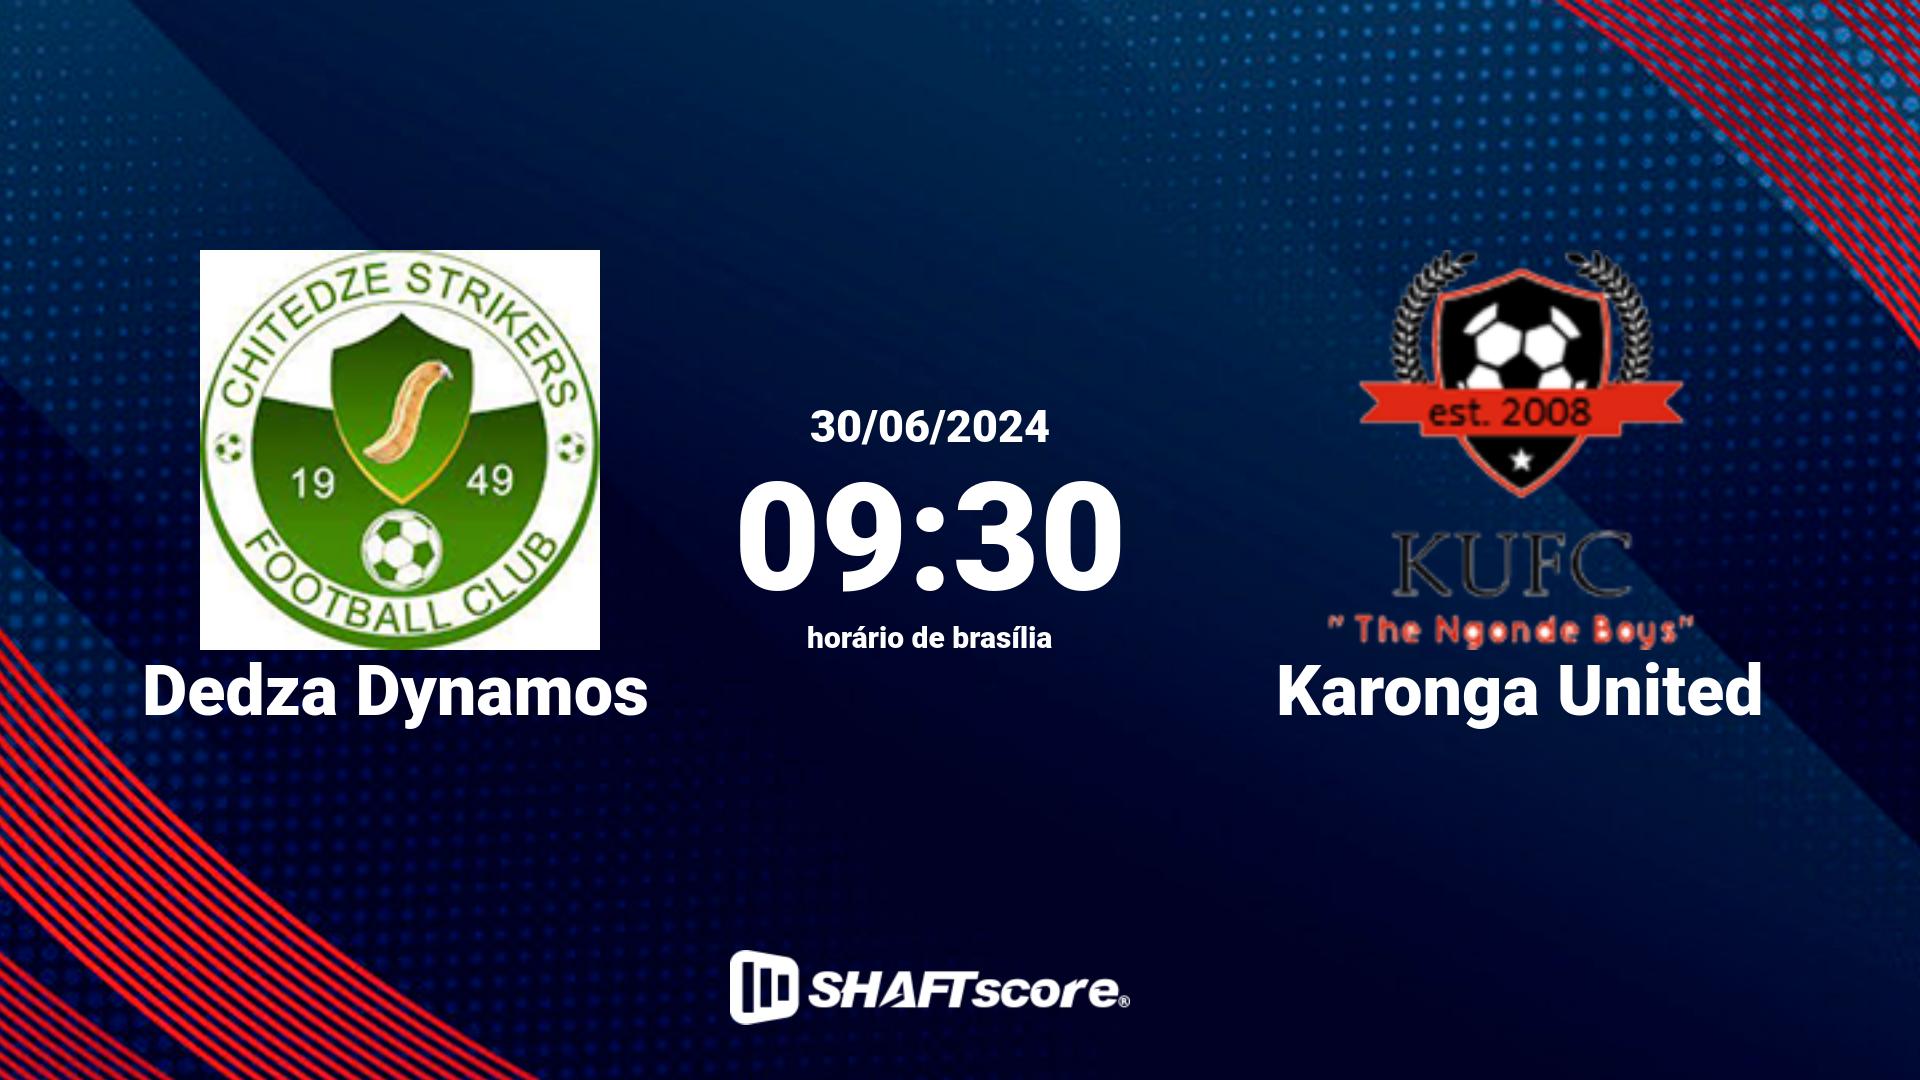 Estatísticas do jogo Dedza Dynamos vs Karonga United 30.06 09:30